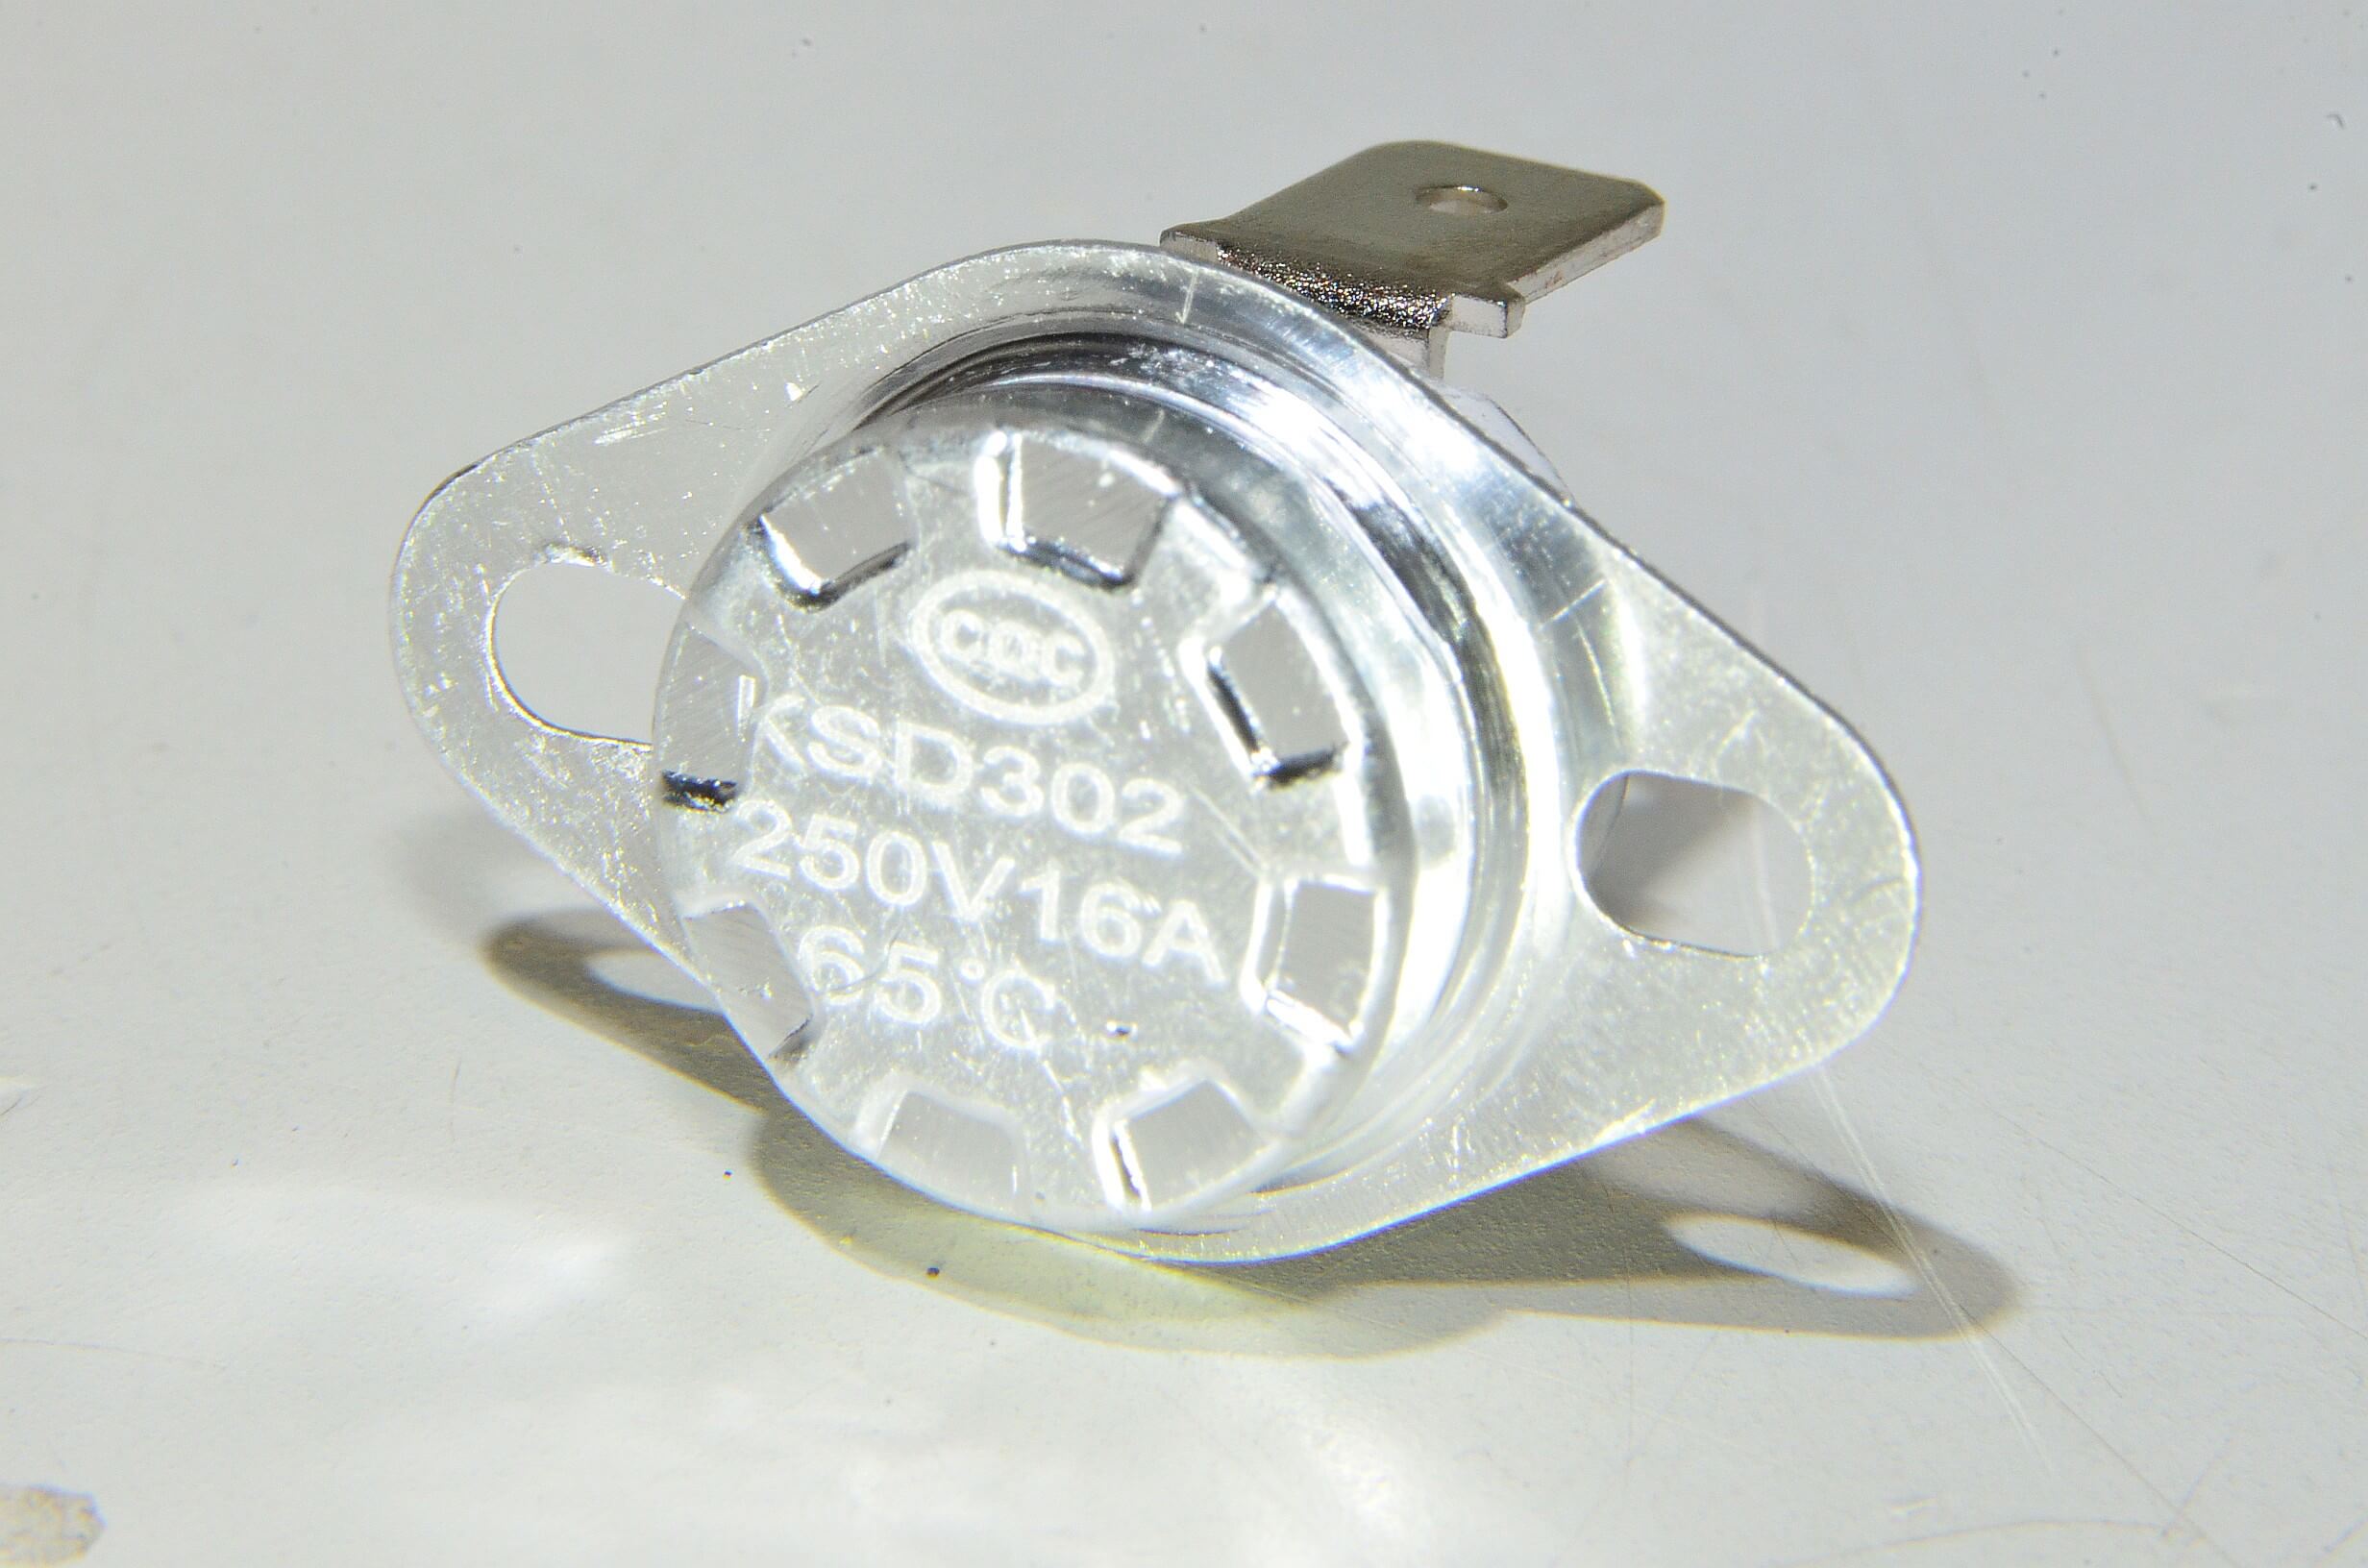 C KSD V A NC Ceramic Bi Metallic Mechanical Thermostat New